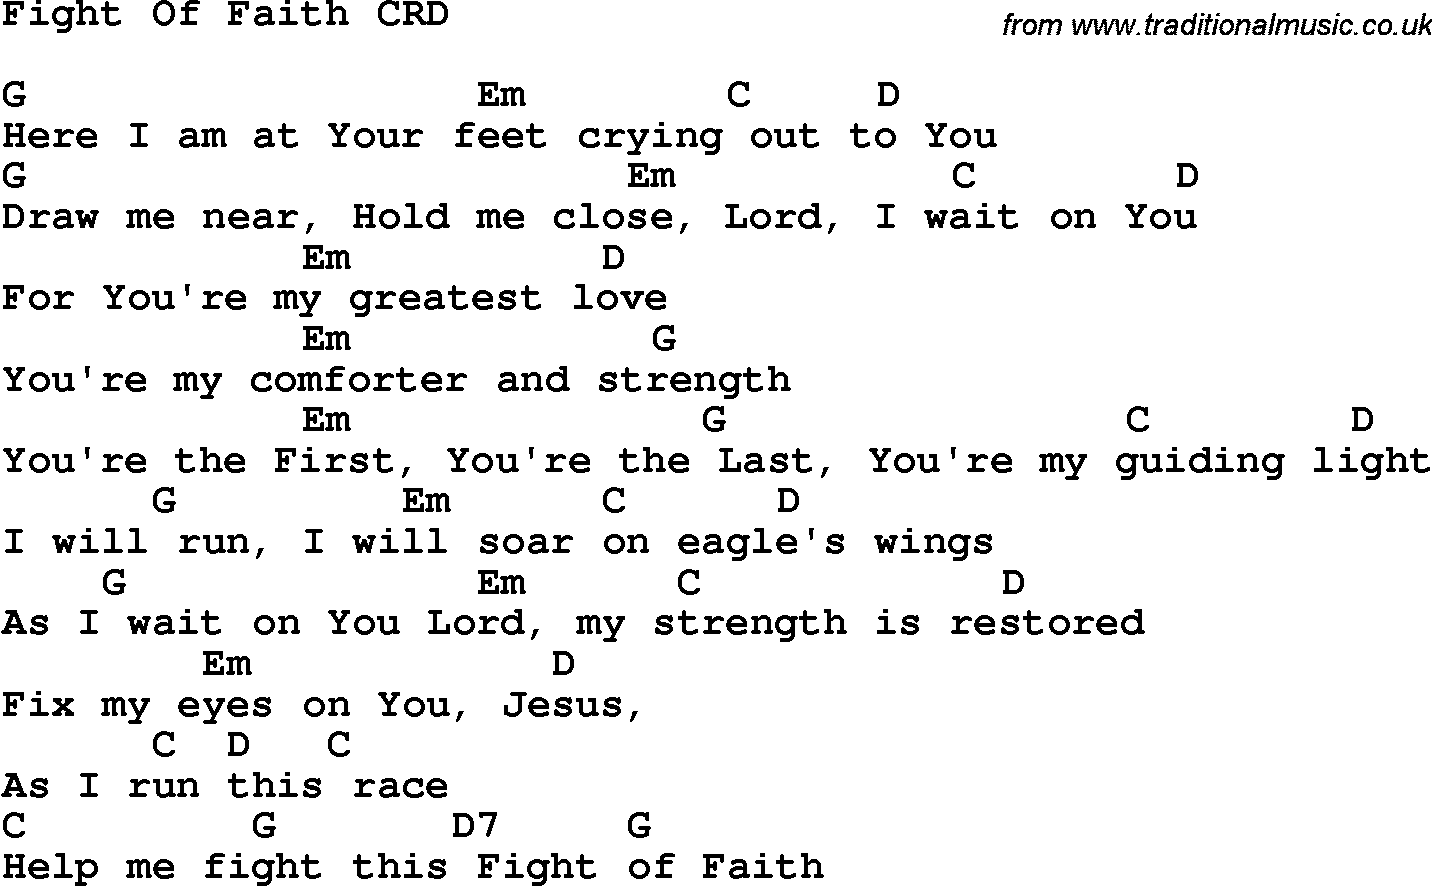 Christian Chlidrens Song Fight Of Faith CRD Lyrics & Chords